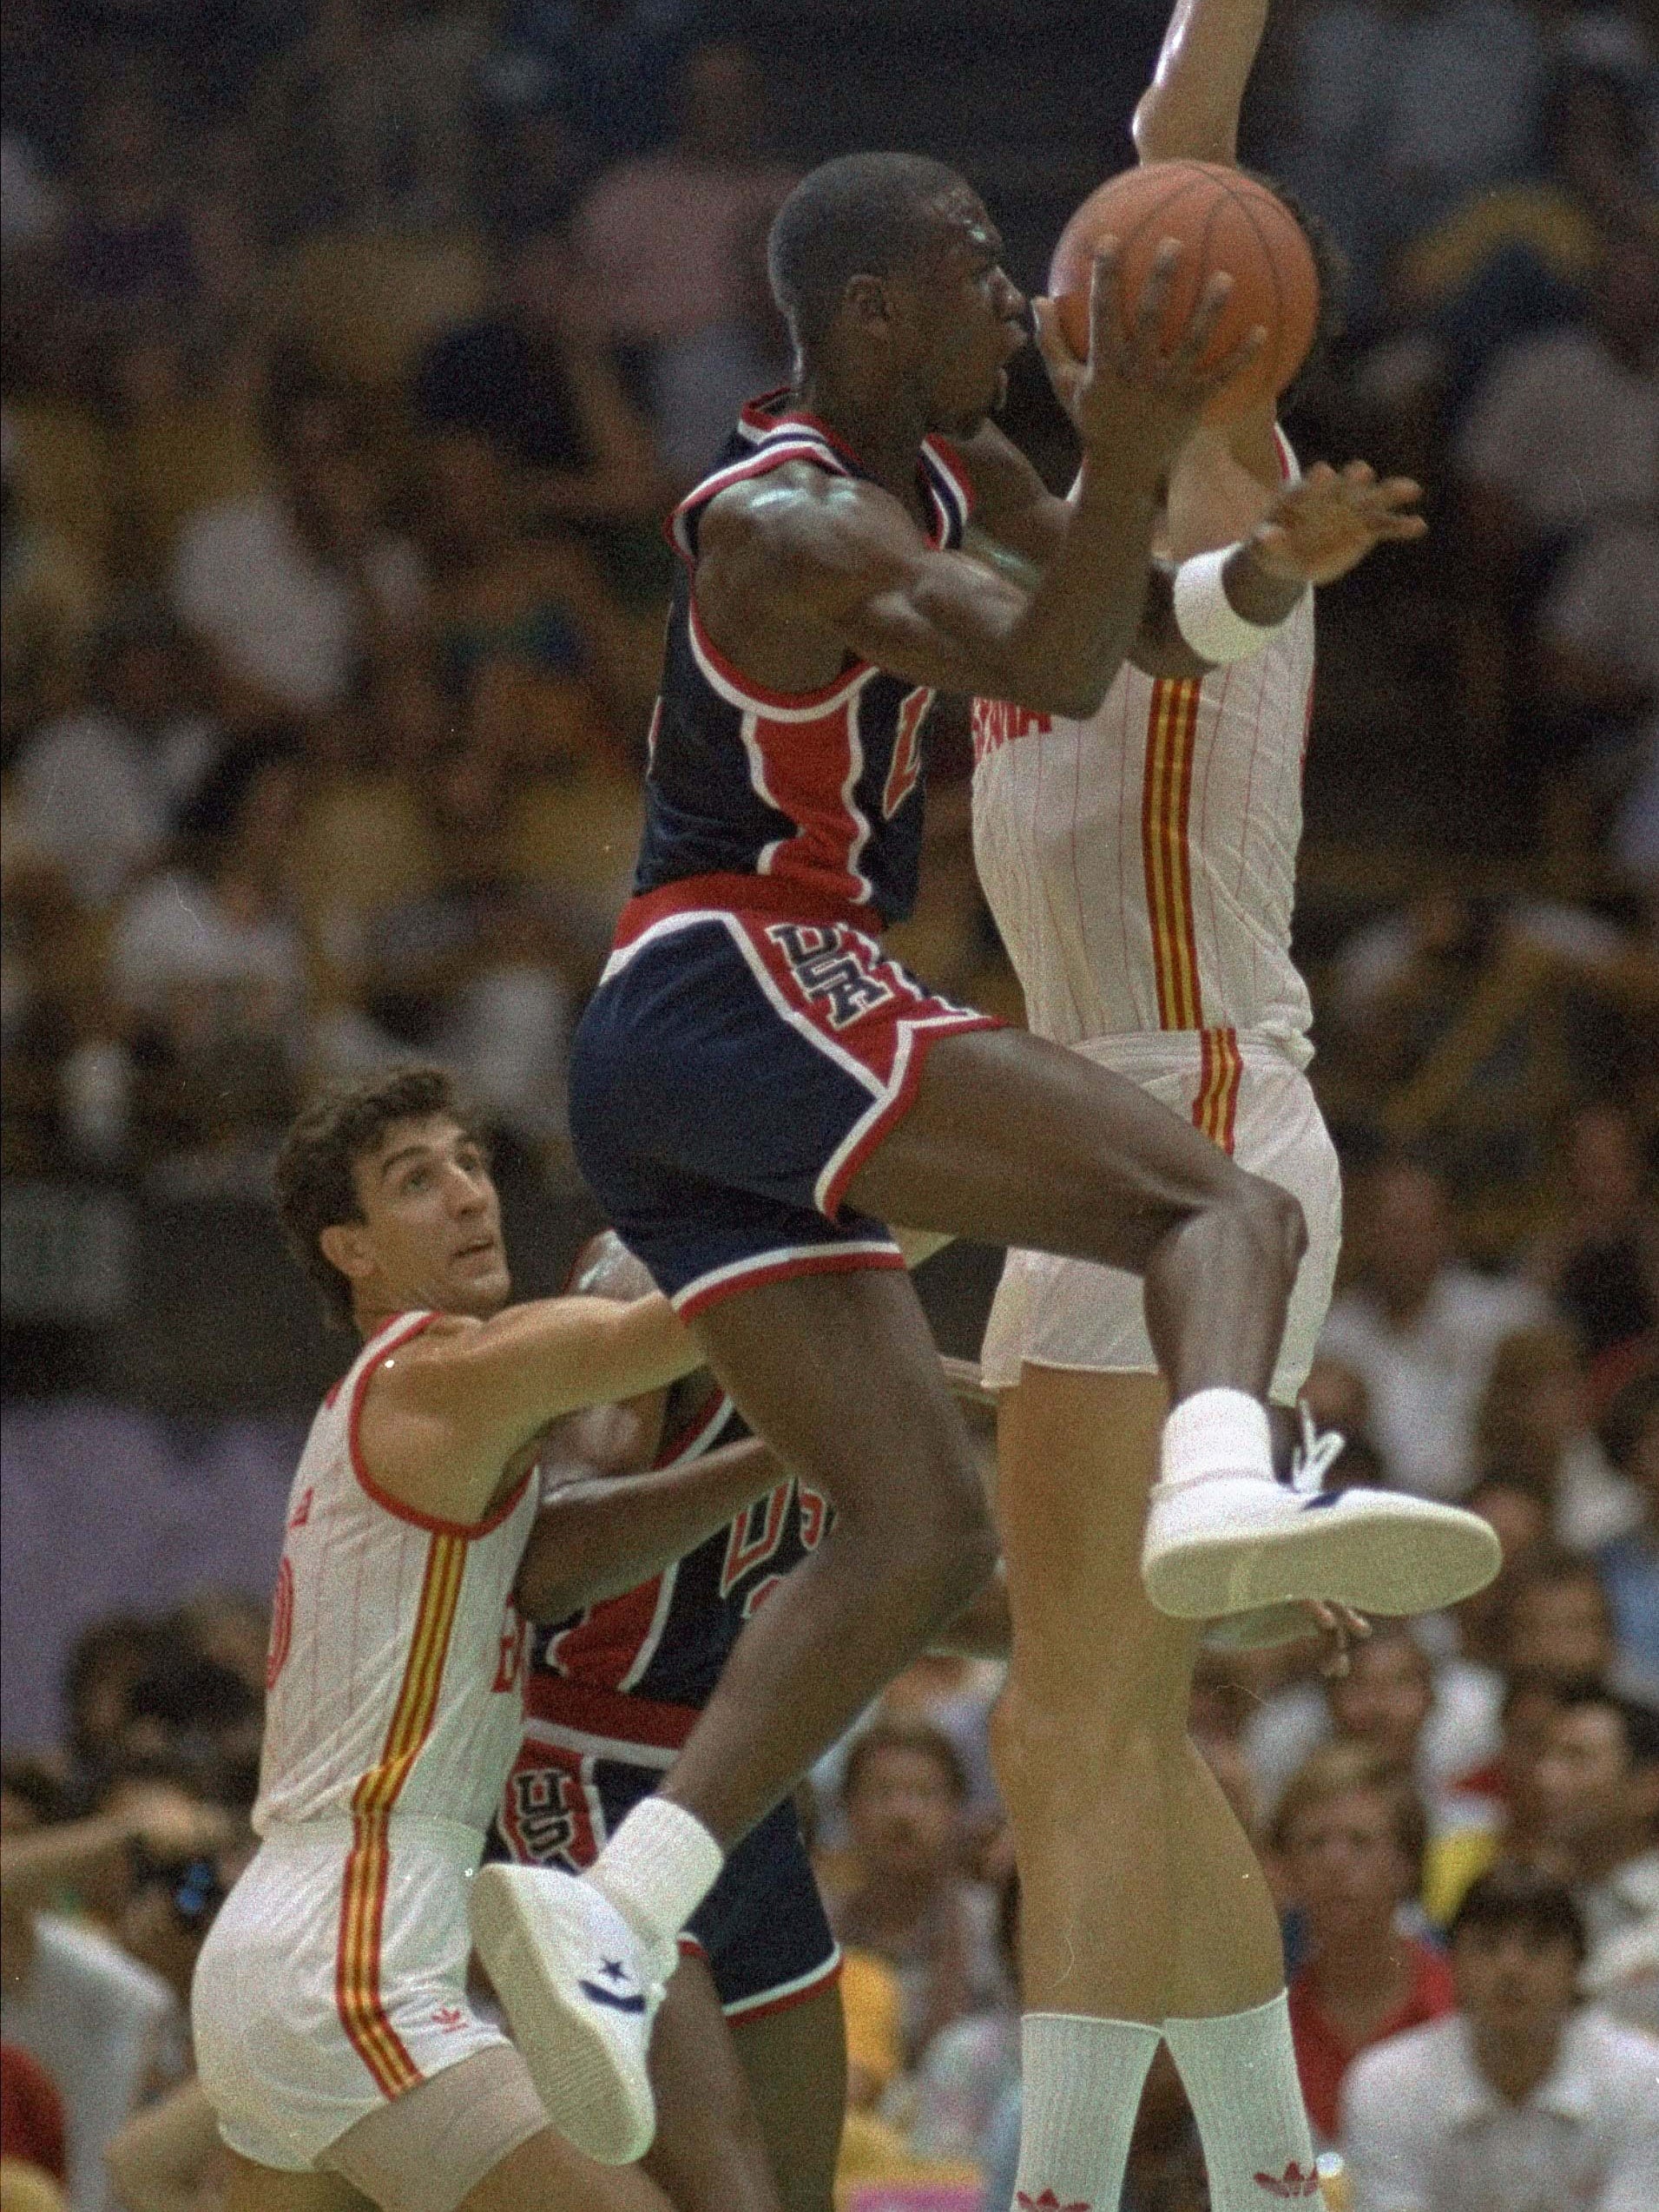 Michael Jordan's game-worn 1984 Olympics $190K